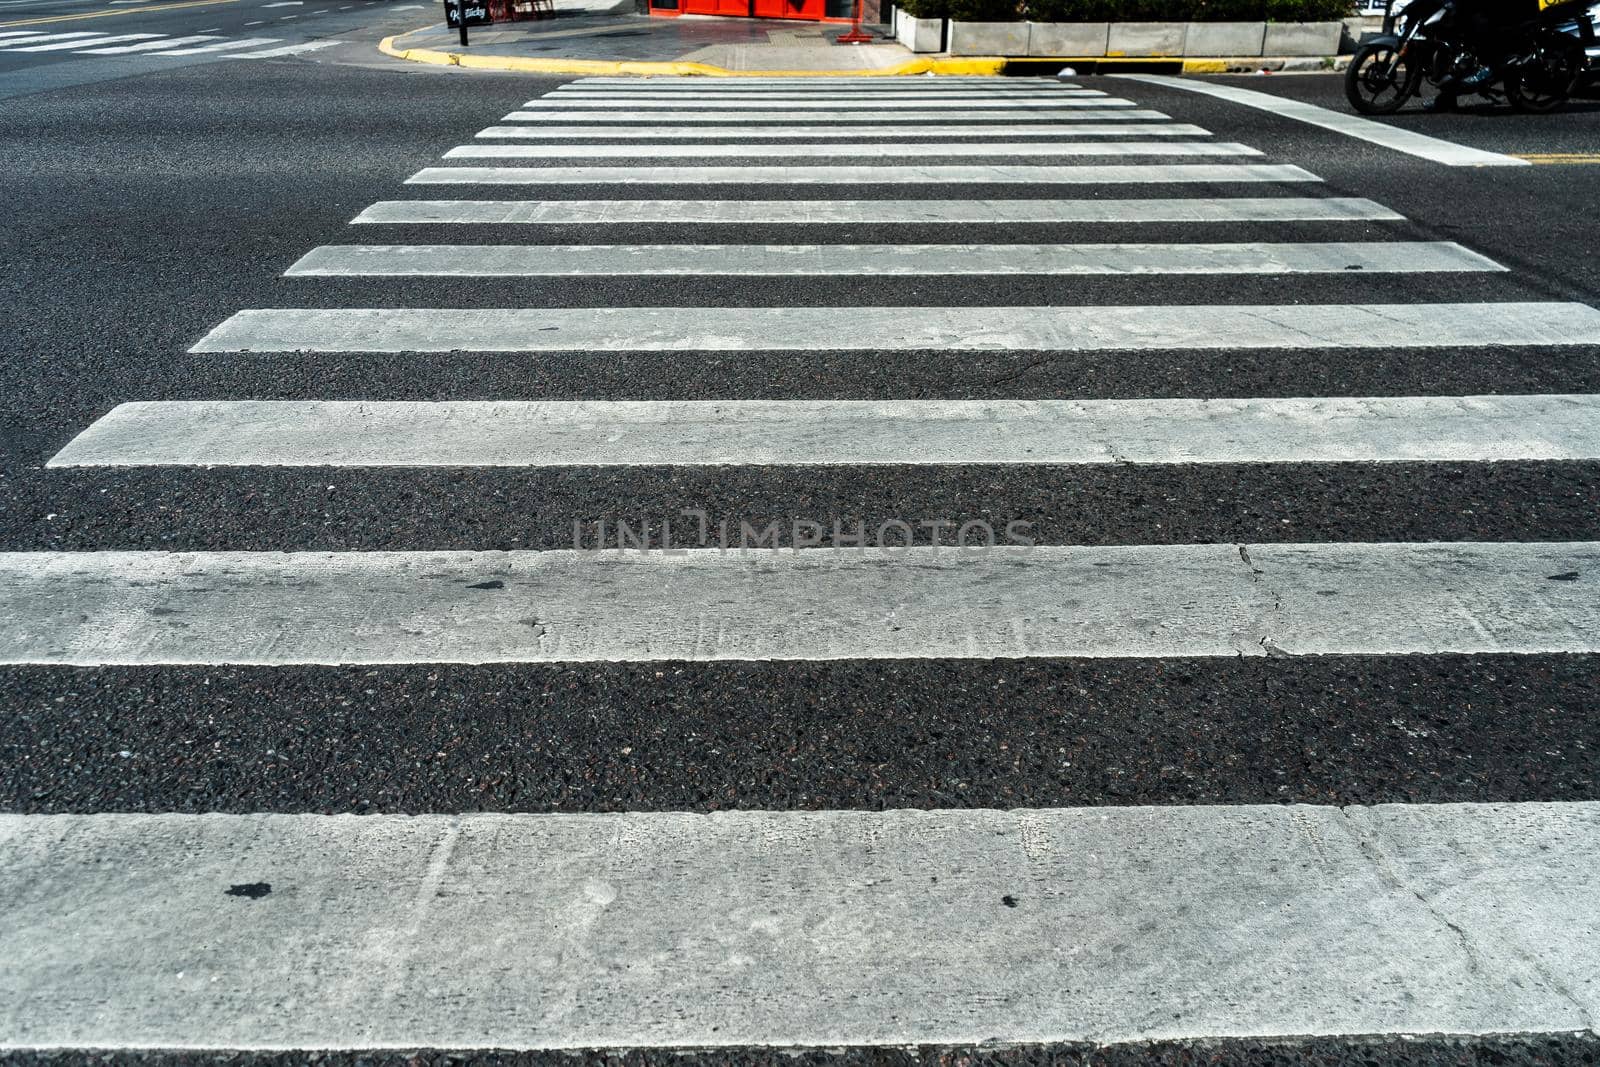 A Zebra crossing stripes on a road